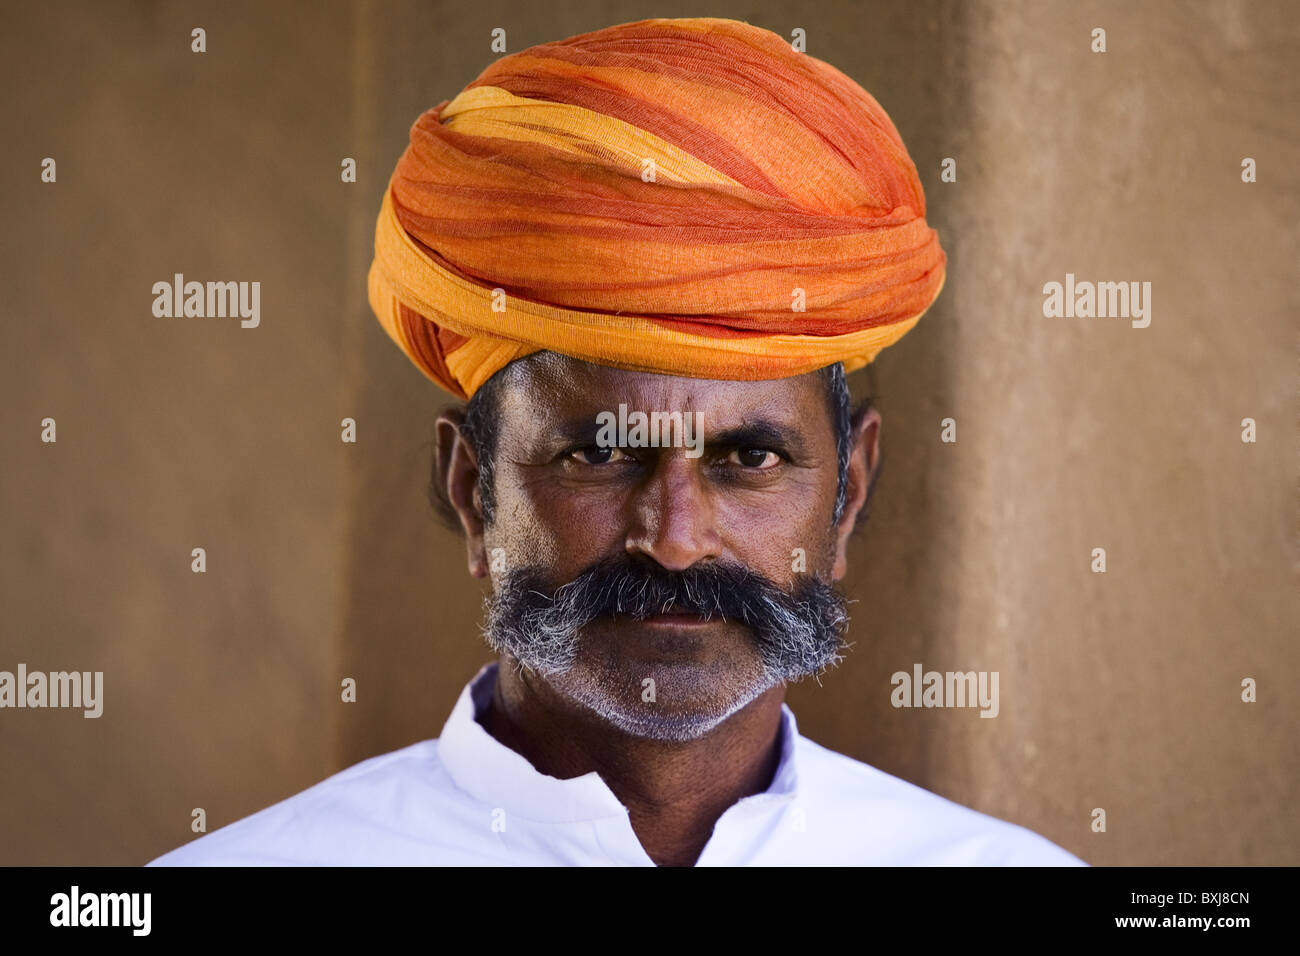 indian with turban, North India, India, Asia Stock Photo